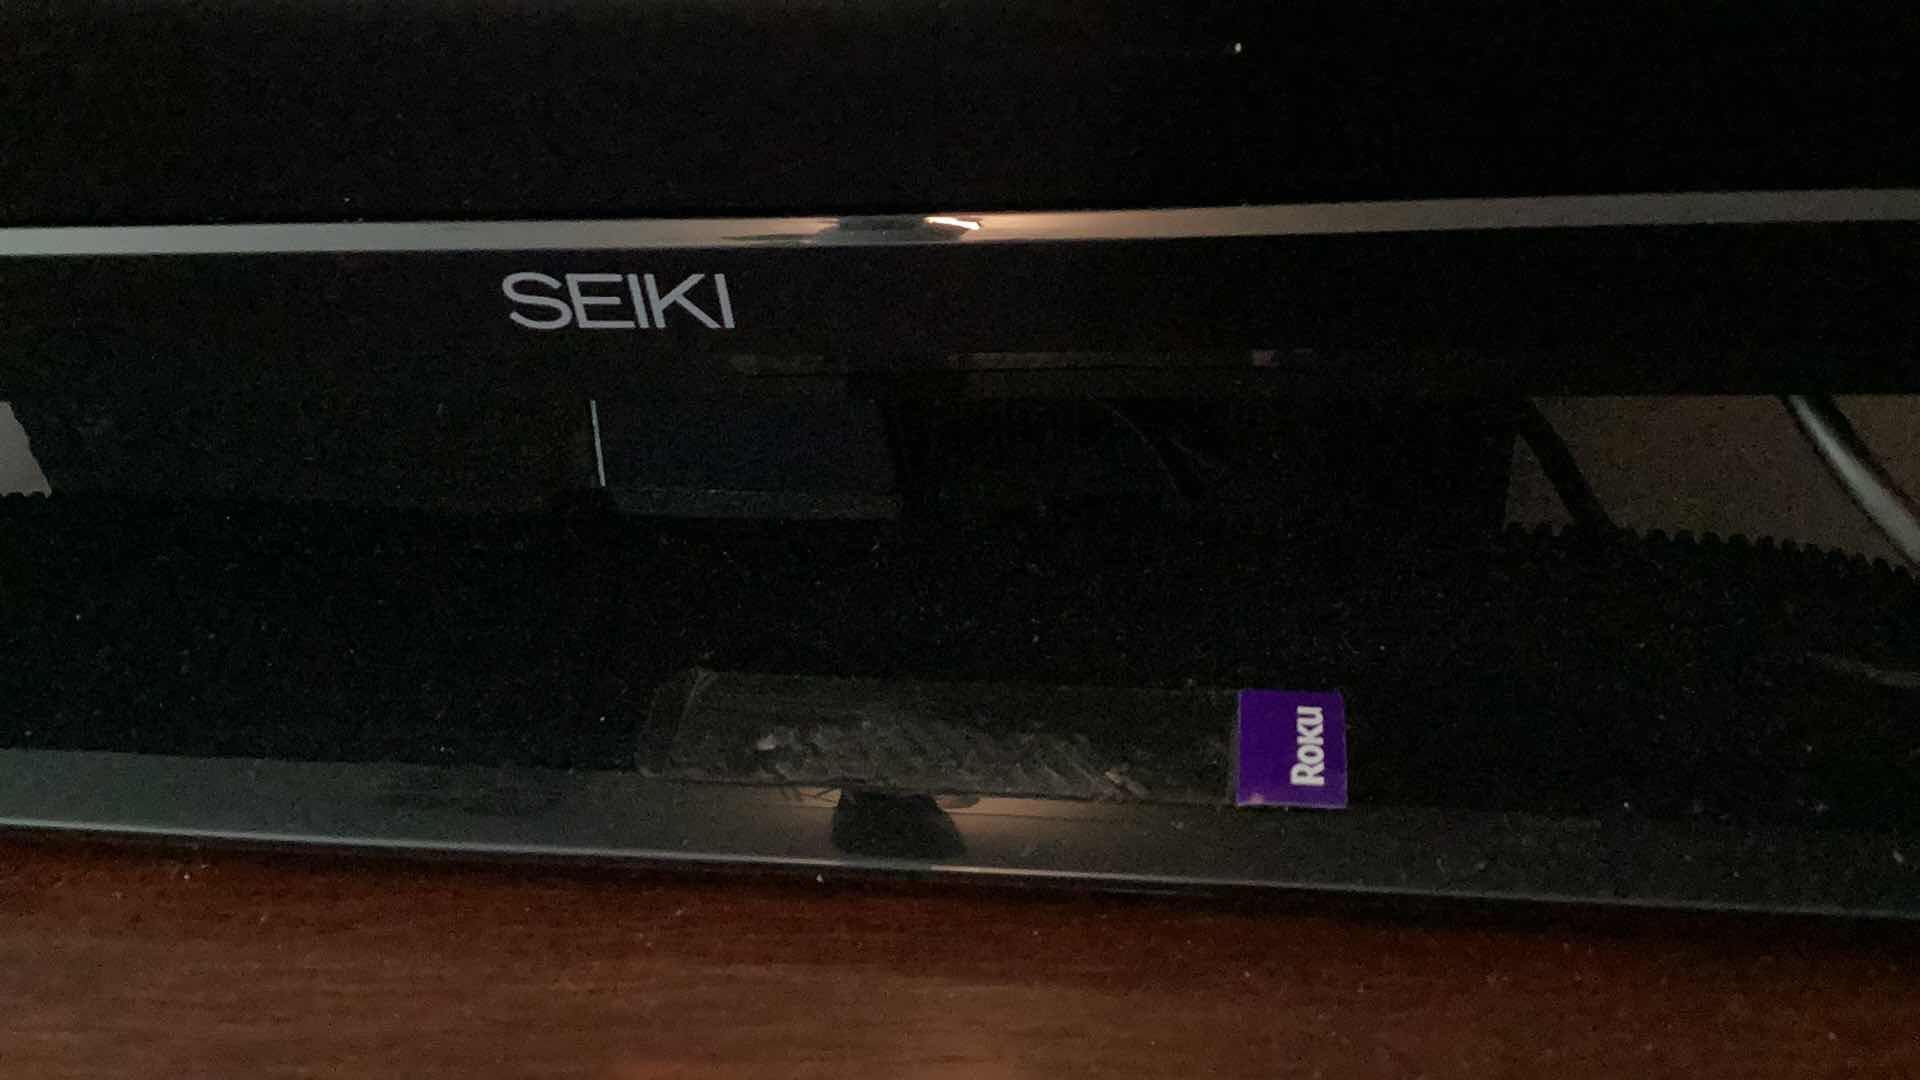 Photo 2 of SEIKI ROKU 32” TV WITH REMOTE